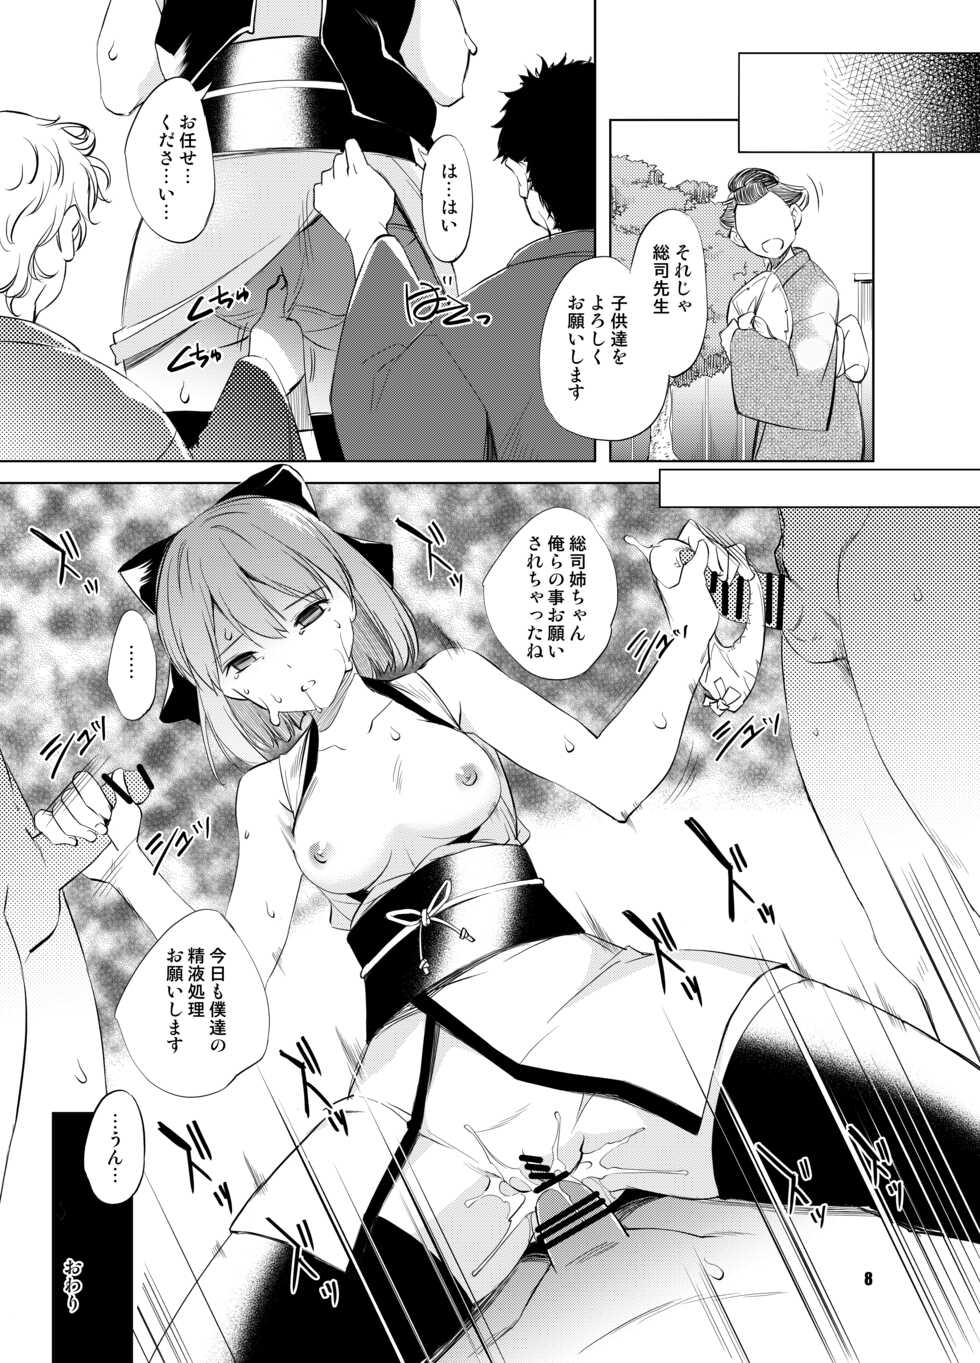 [Kawamura Tsukasa] FGO Okita Souji Manga (Fate/Grand Order) - Page 8